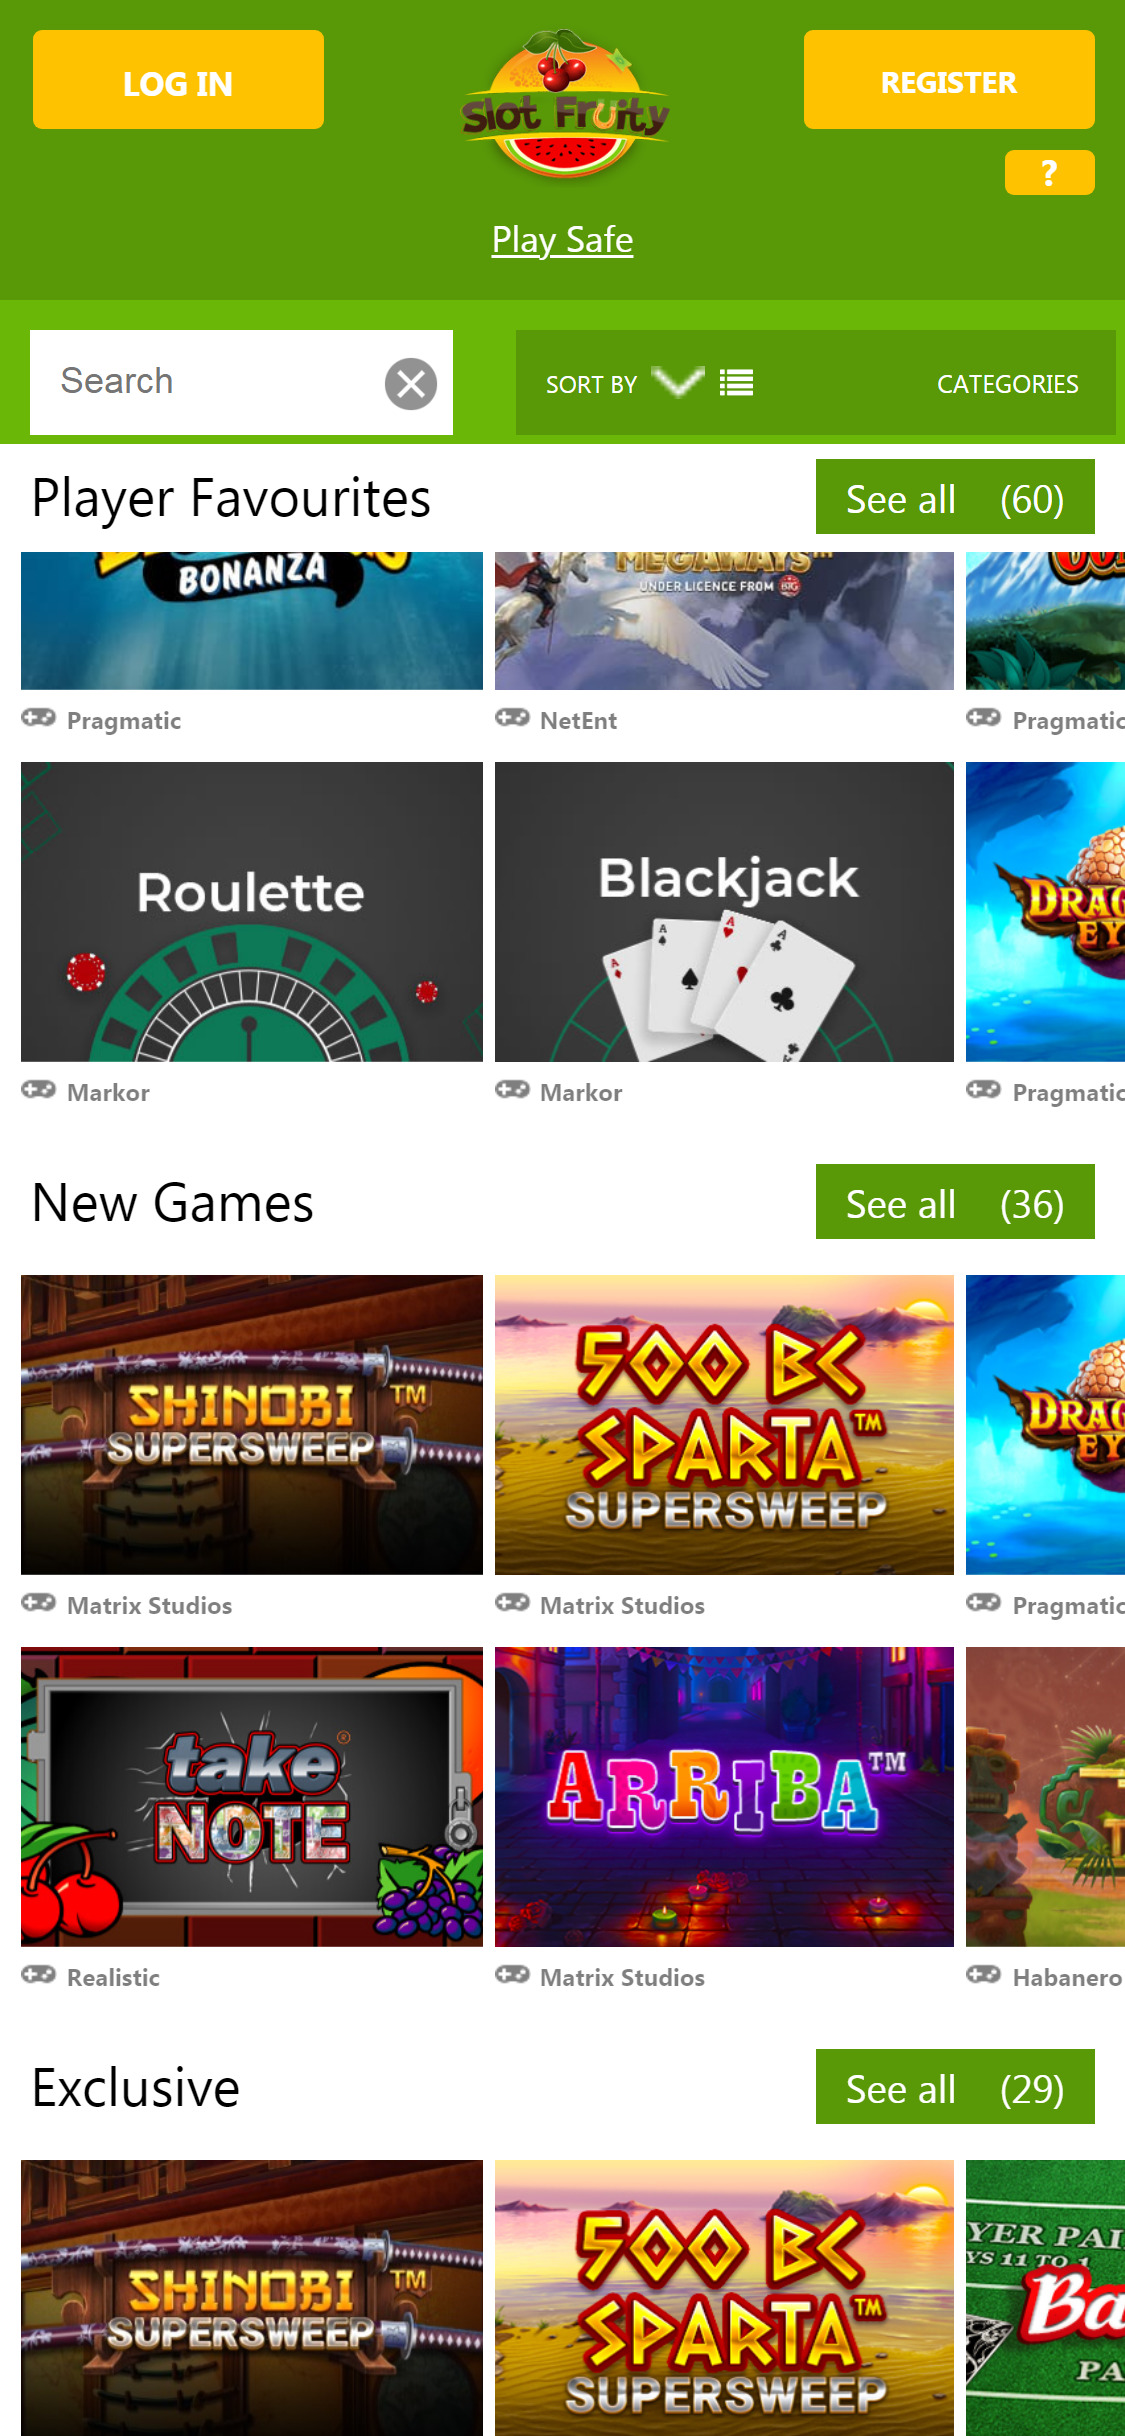 Slot Fruity Casino Mobile Games Review